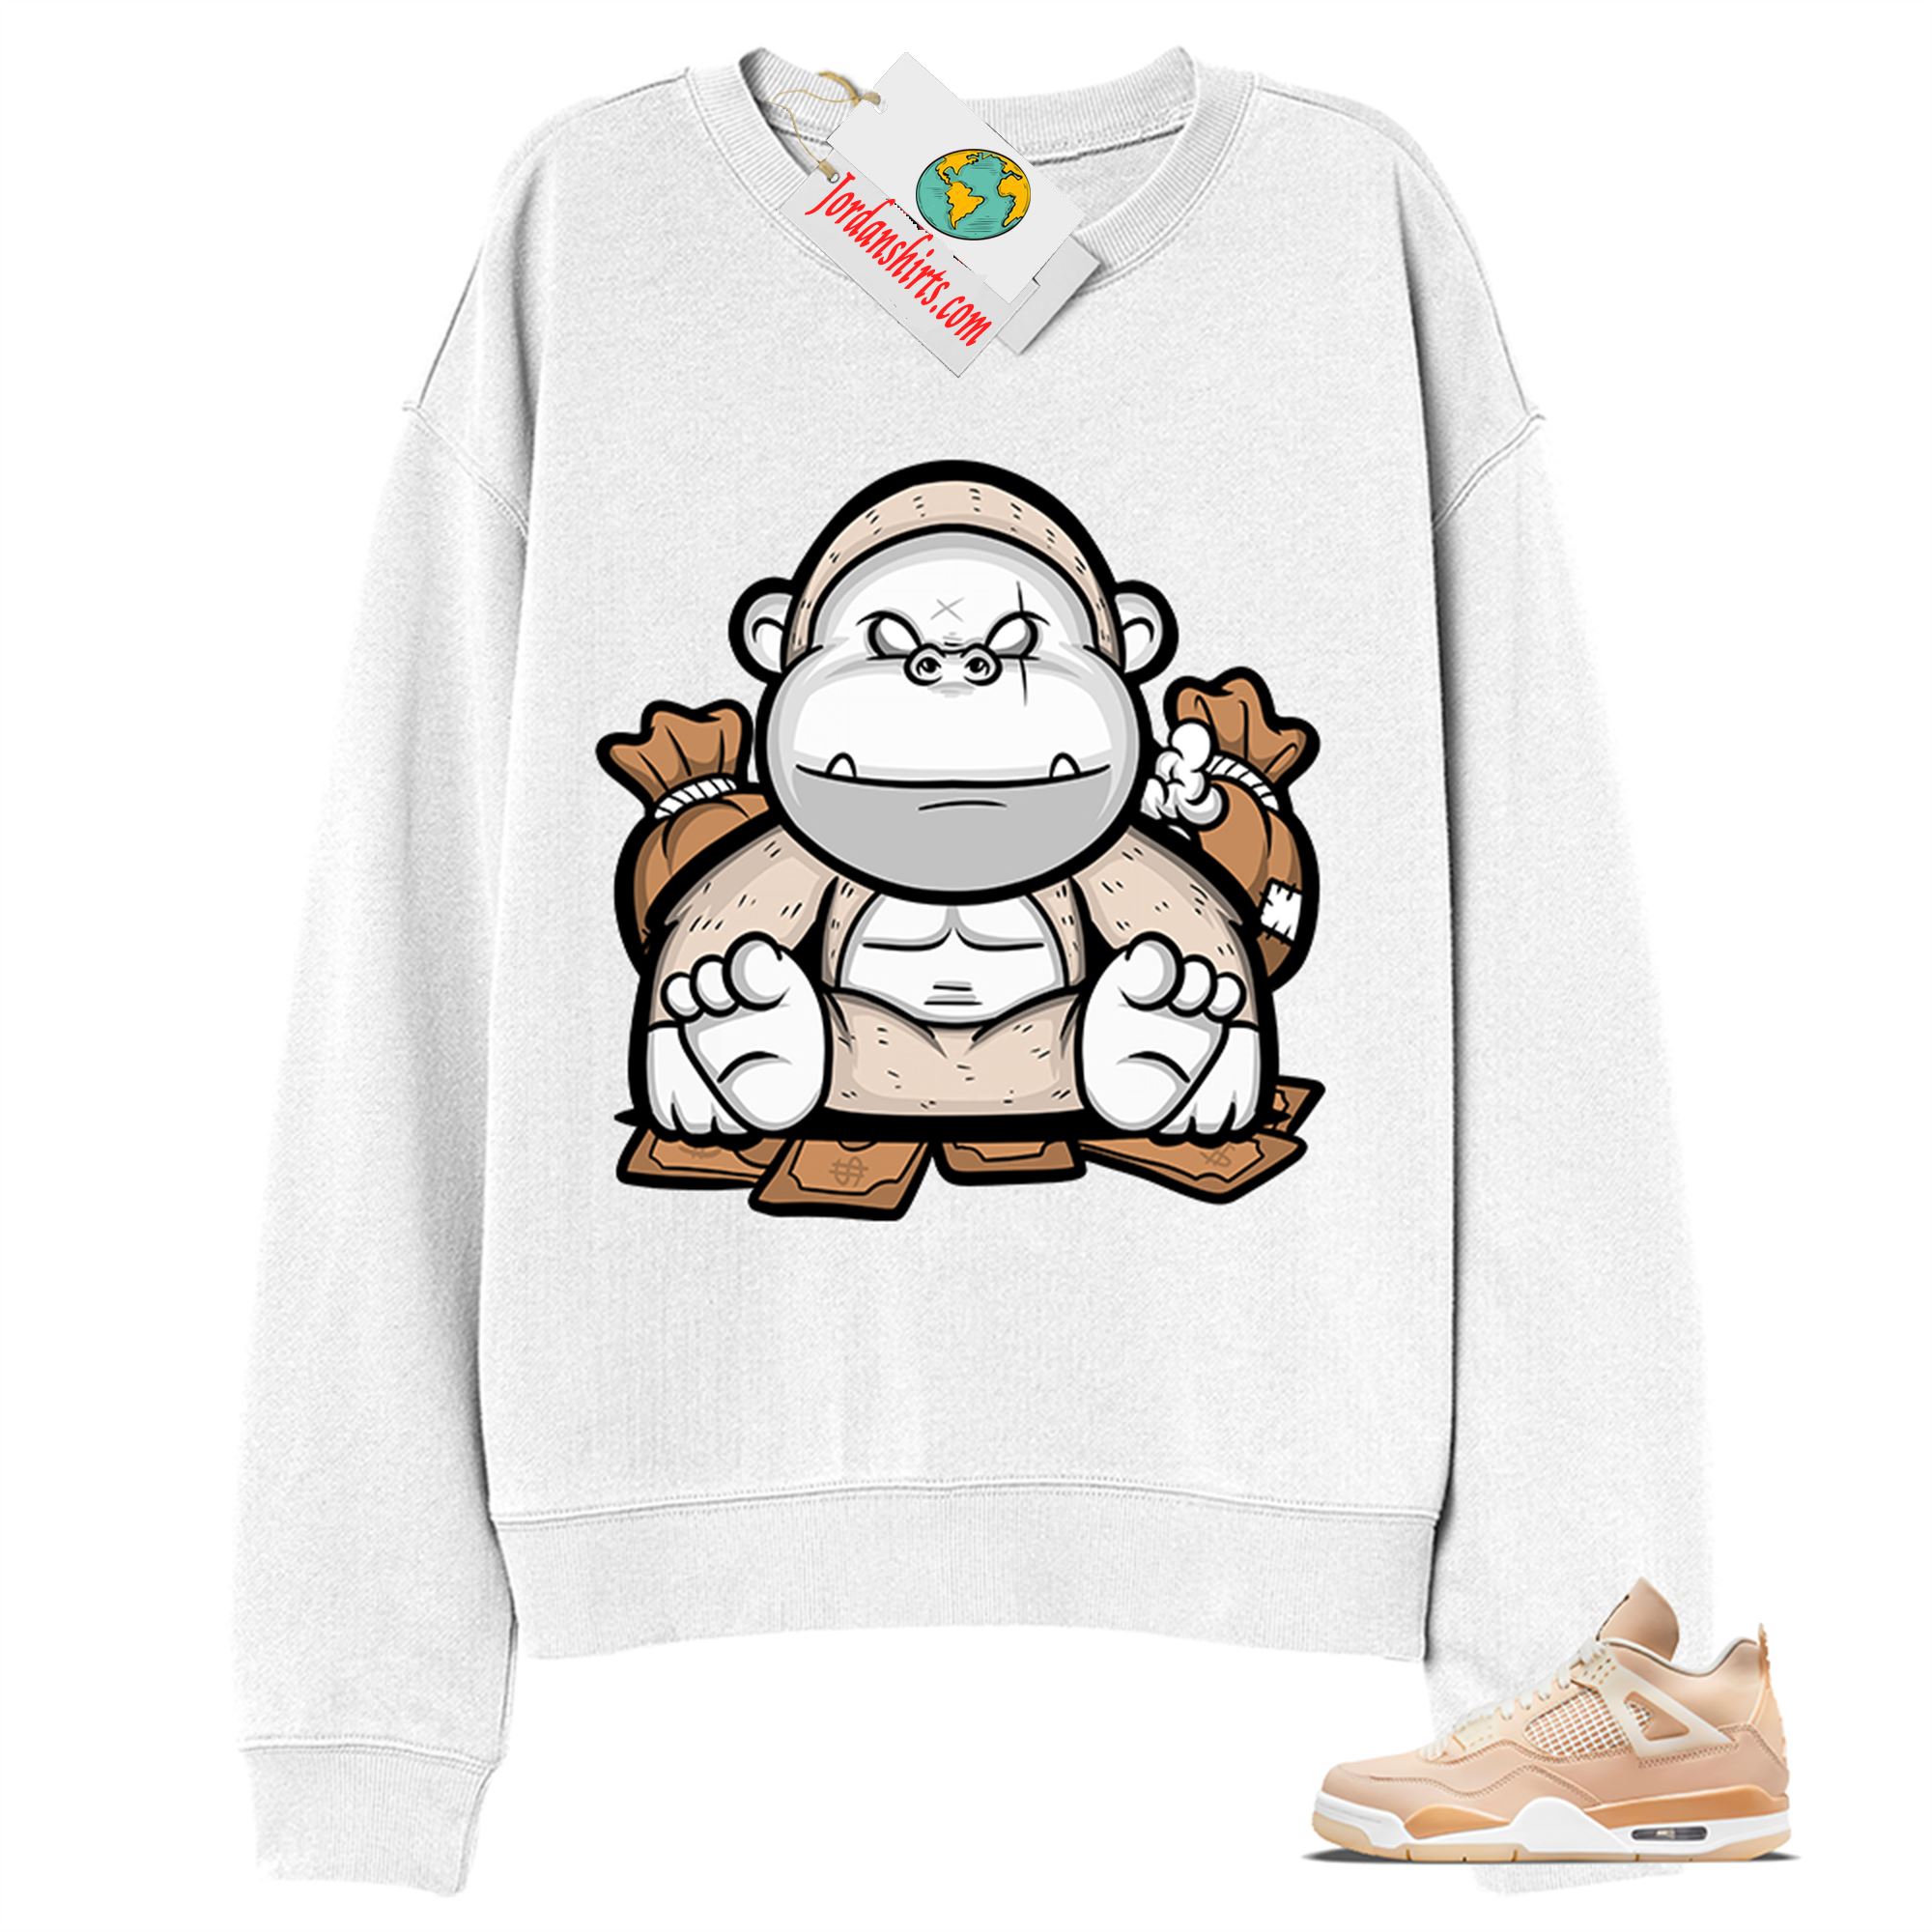 Jordan 4 Sweatshirt, Rich Gorilla With Money White Sweatshirt Air Jordan 4 Shimmer 4s Plus Size Up To 5xl